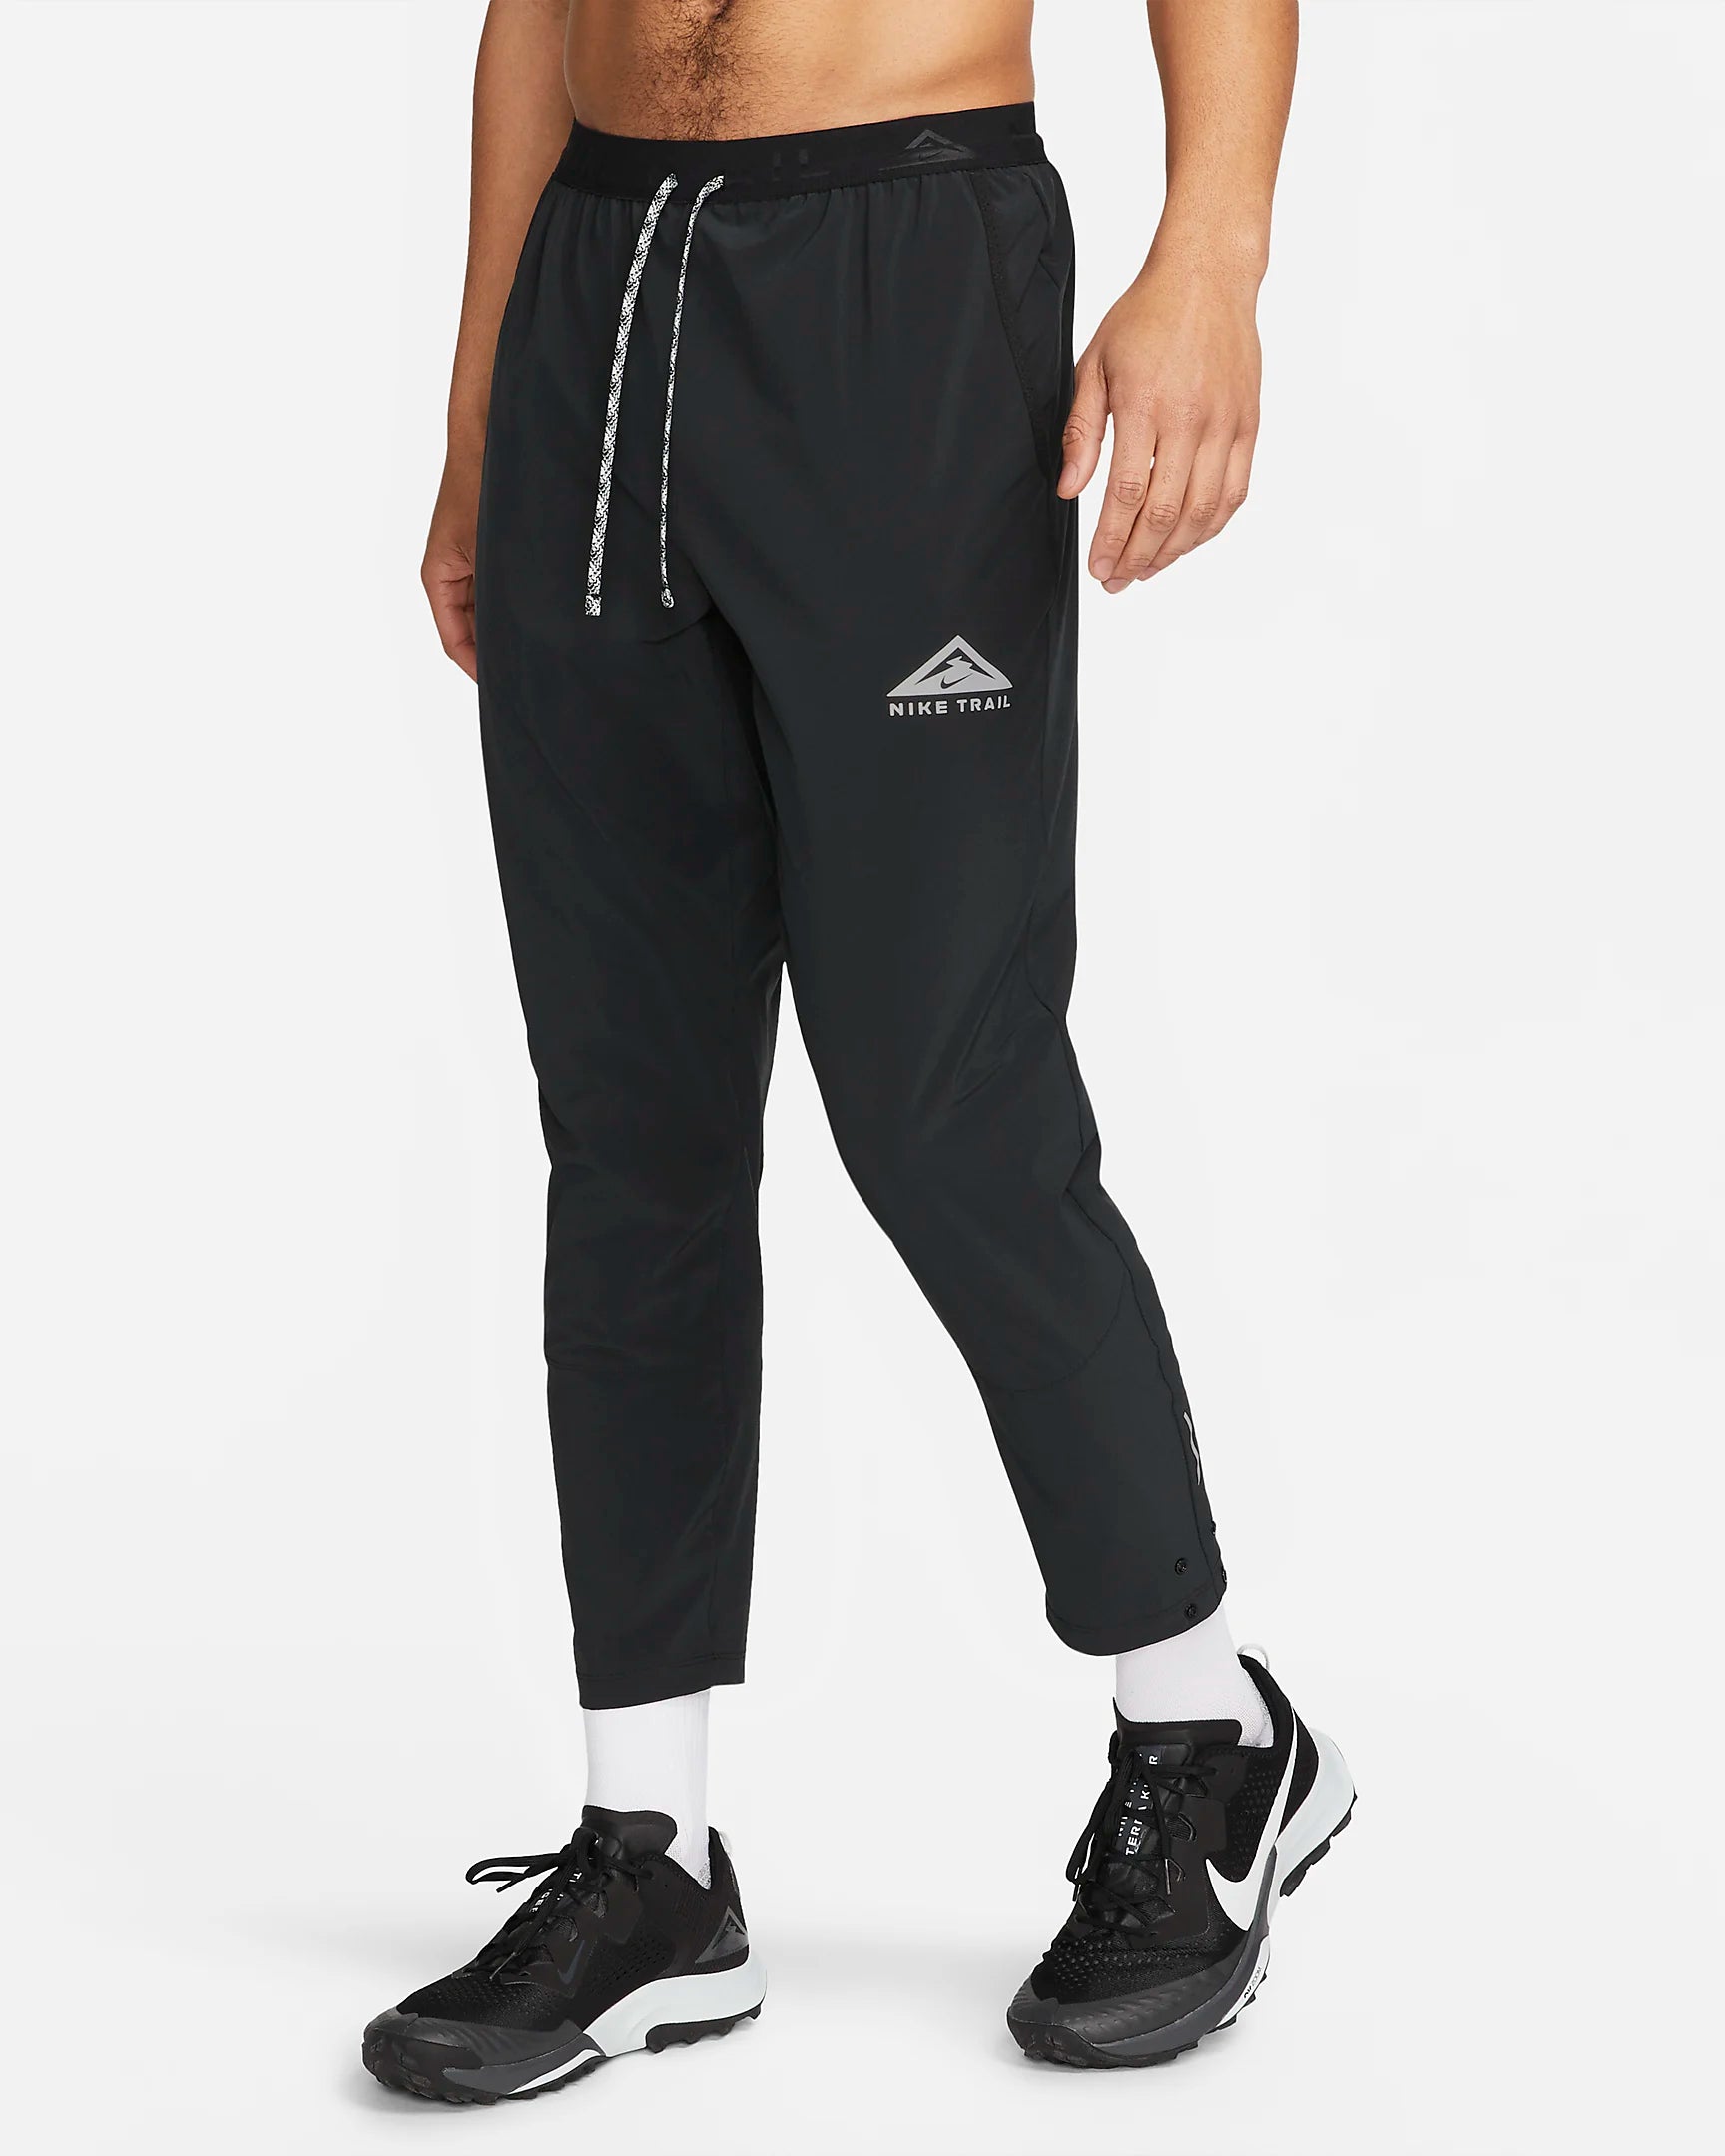 Nike Trail Pants - Black